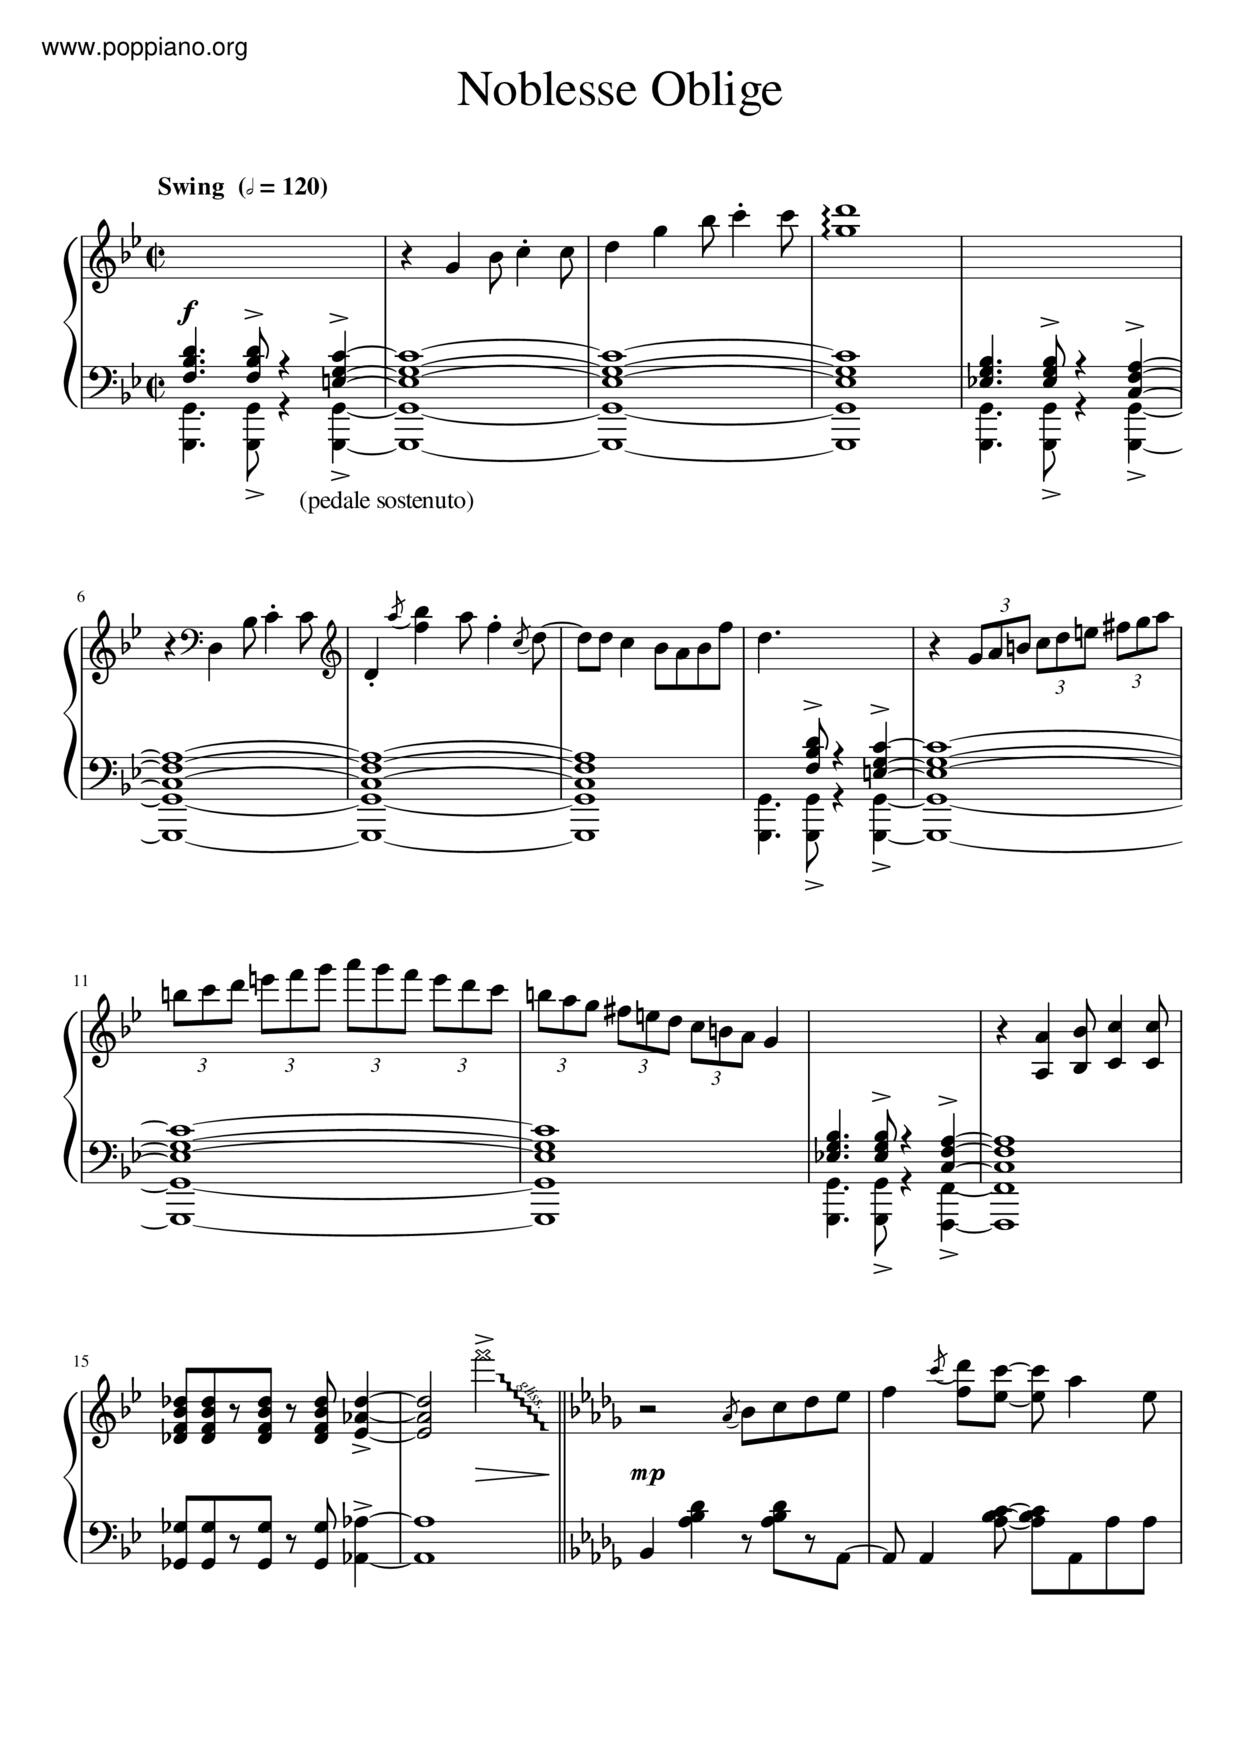 Deemo - Noblesse Obligeピアノ譜